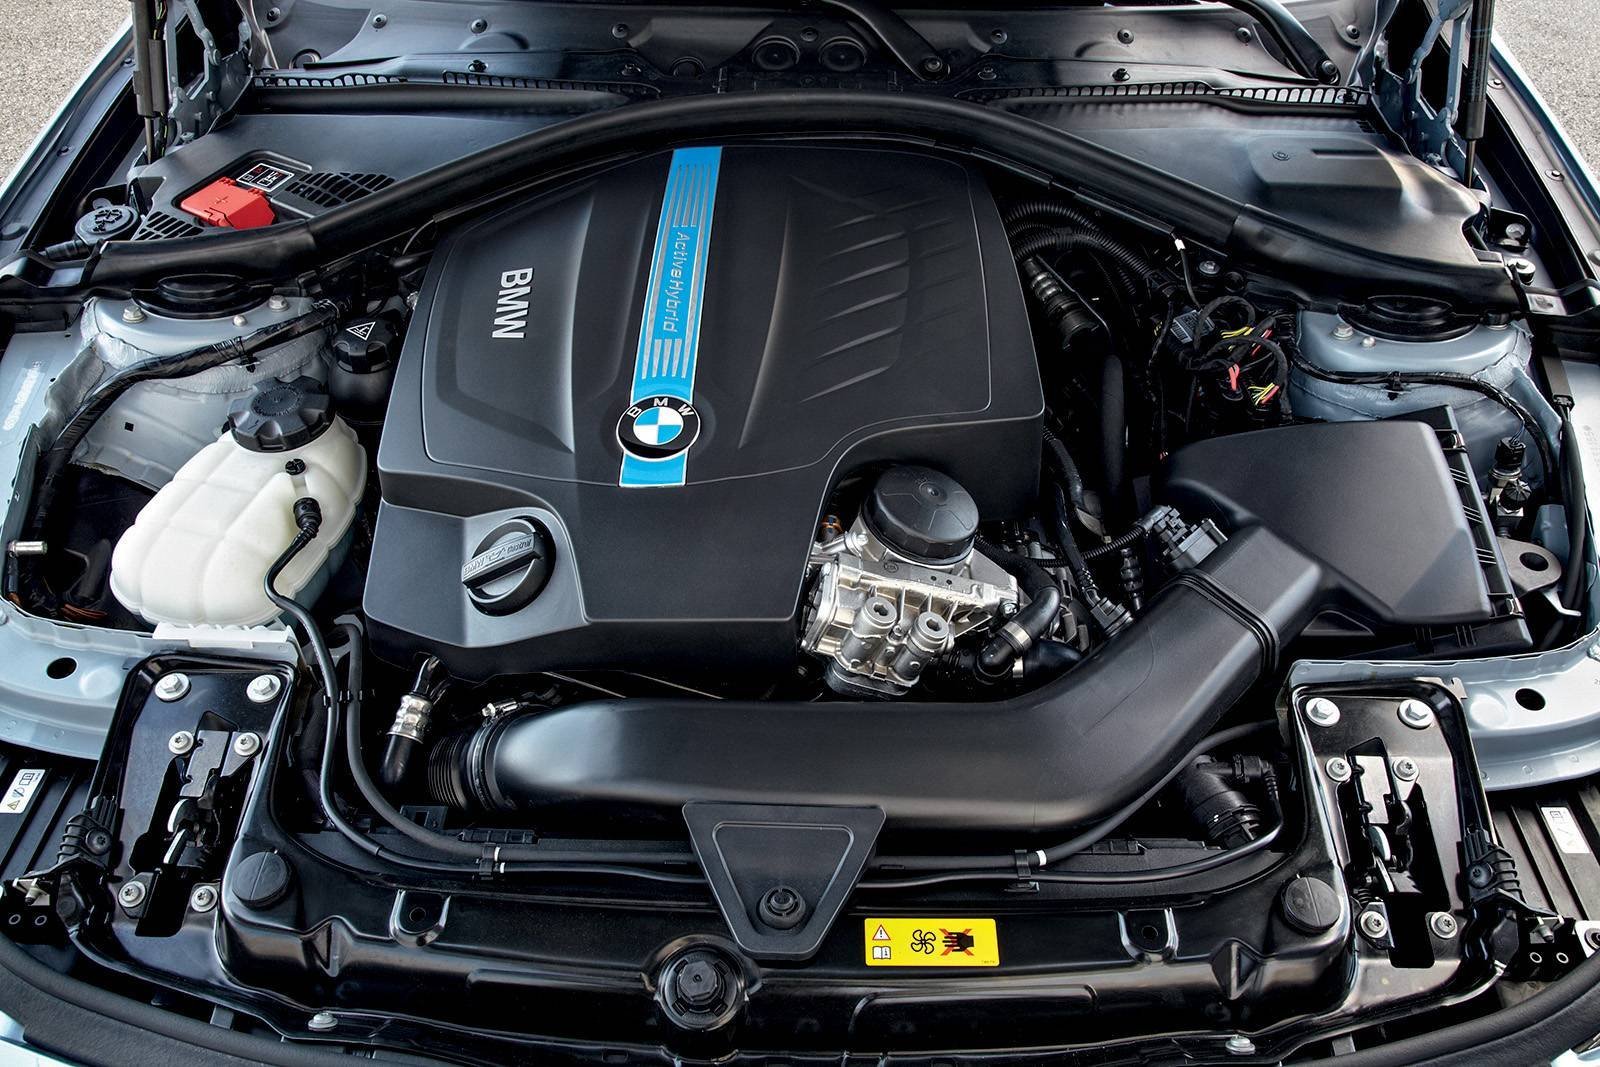 Motor Active Hybrid, da BMW